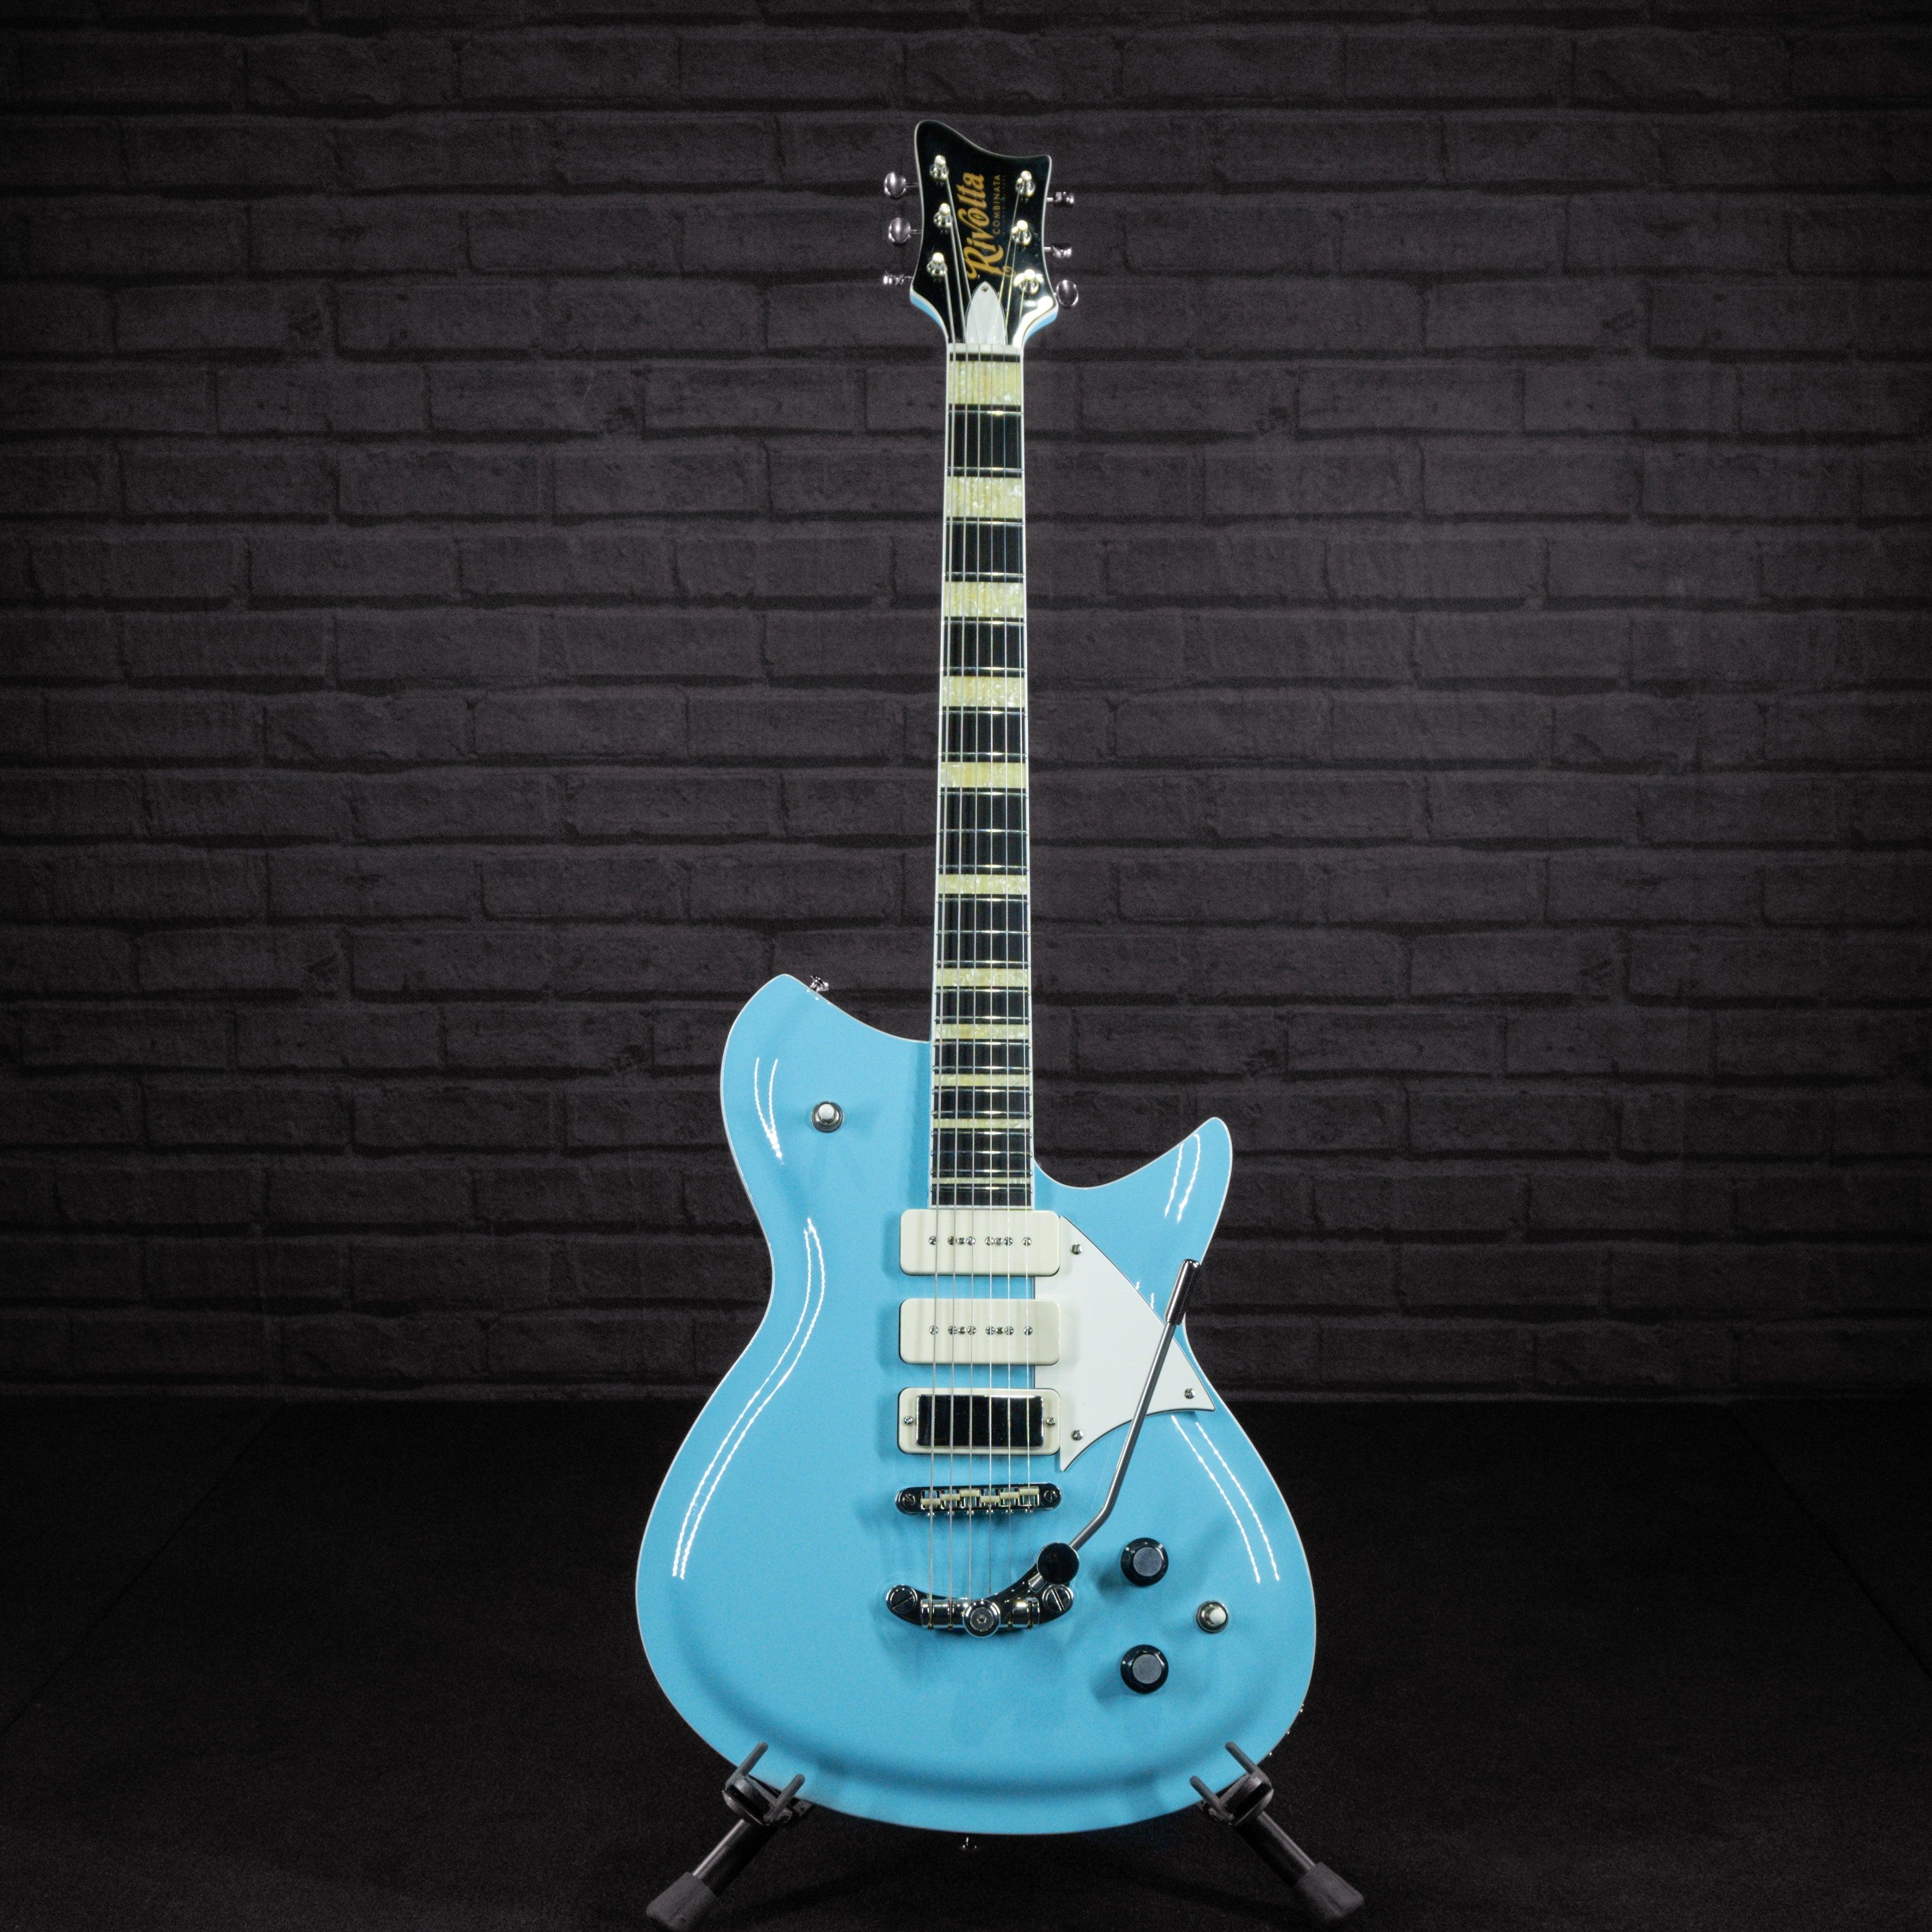 Rivolta Combinata XVII HSS "Califia Blue" (Impulse Music Co. Exclusive) Electric Guitar B-Stock - Impulse Music Co.